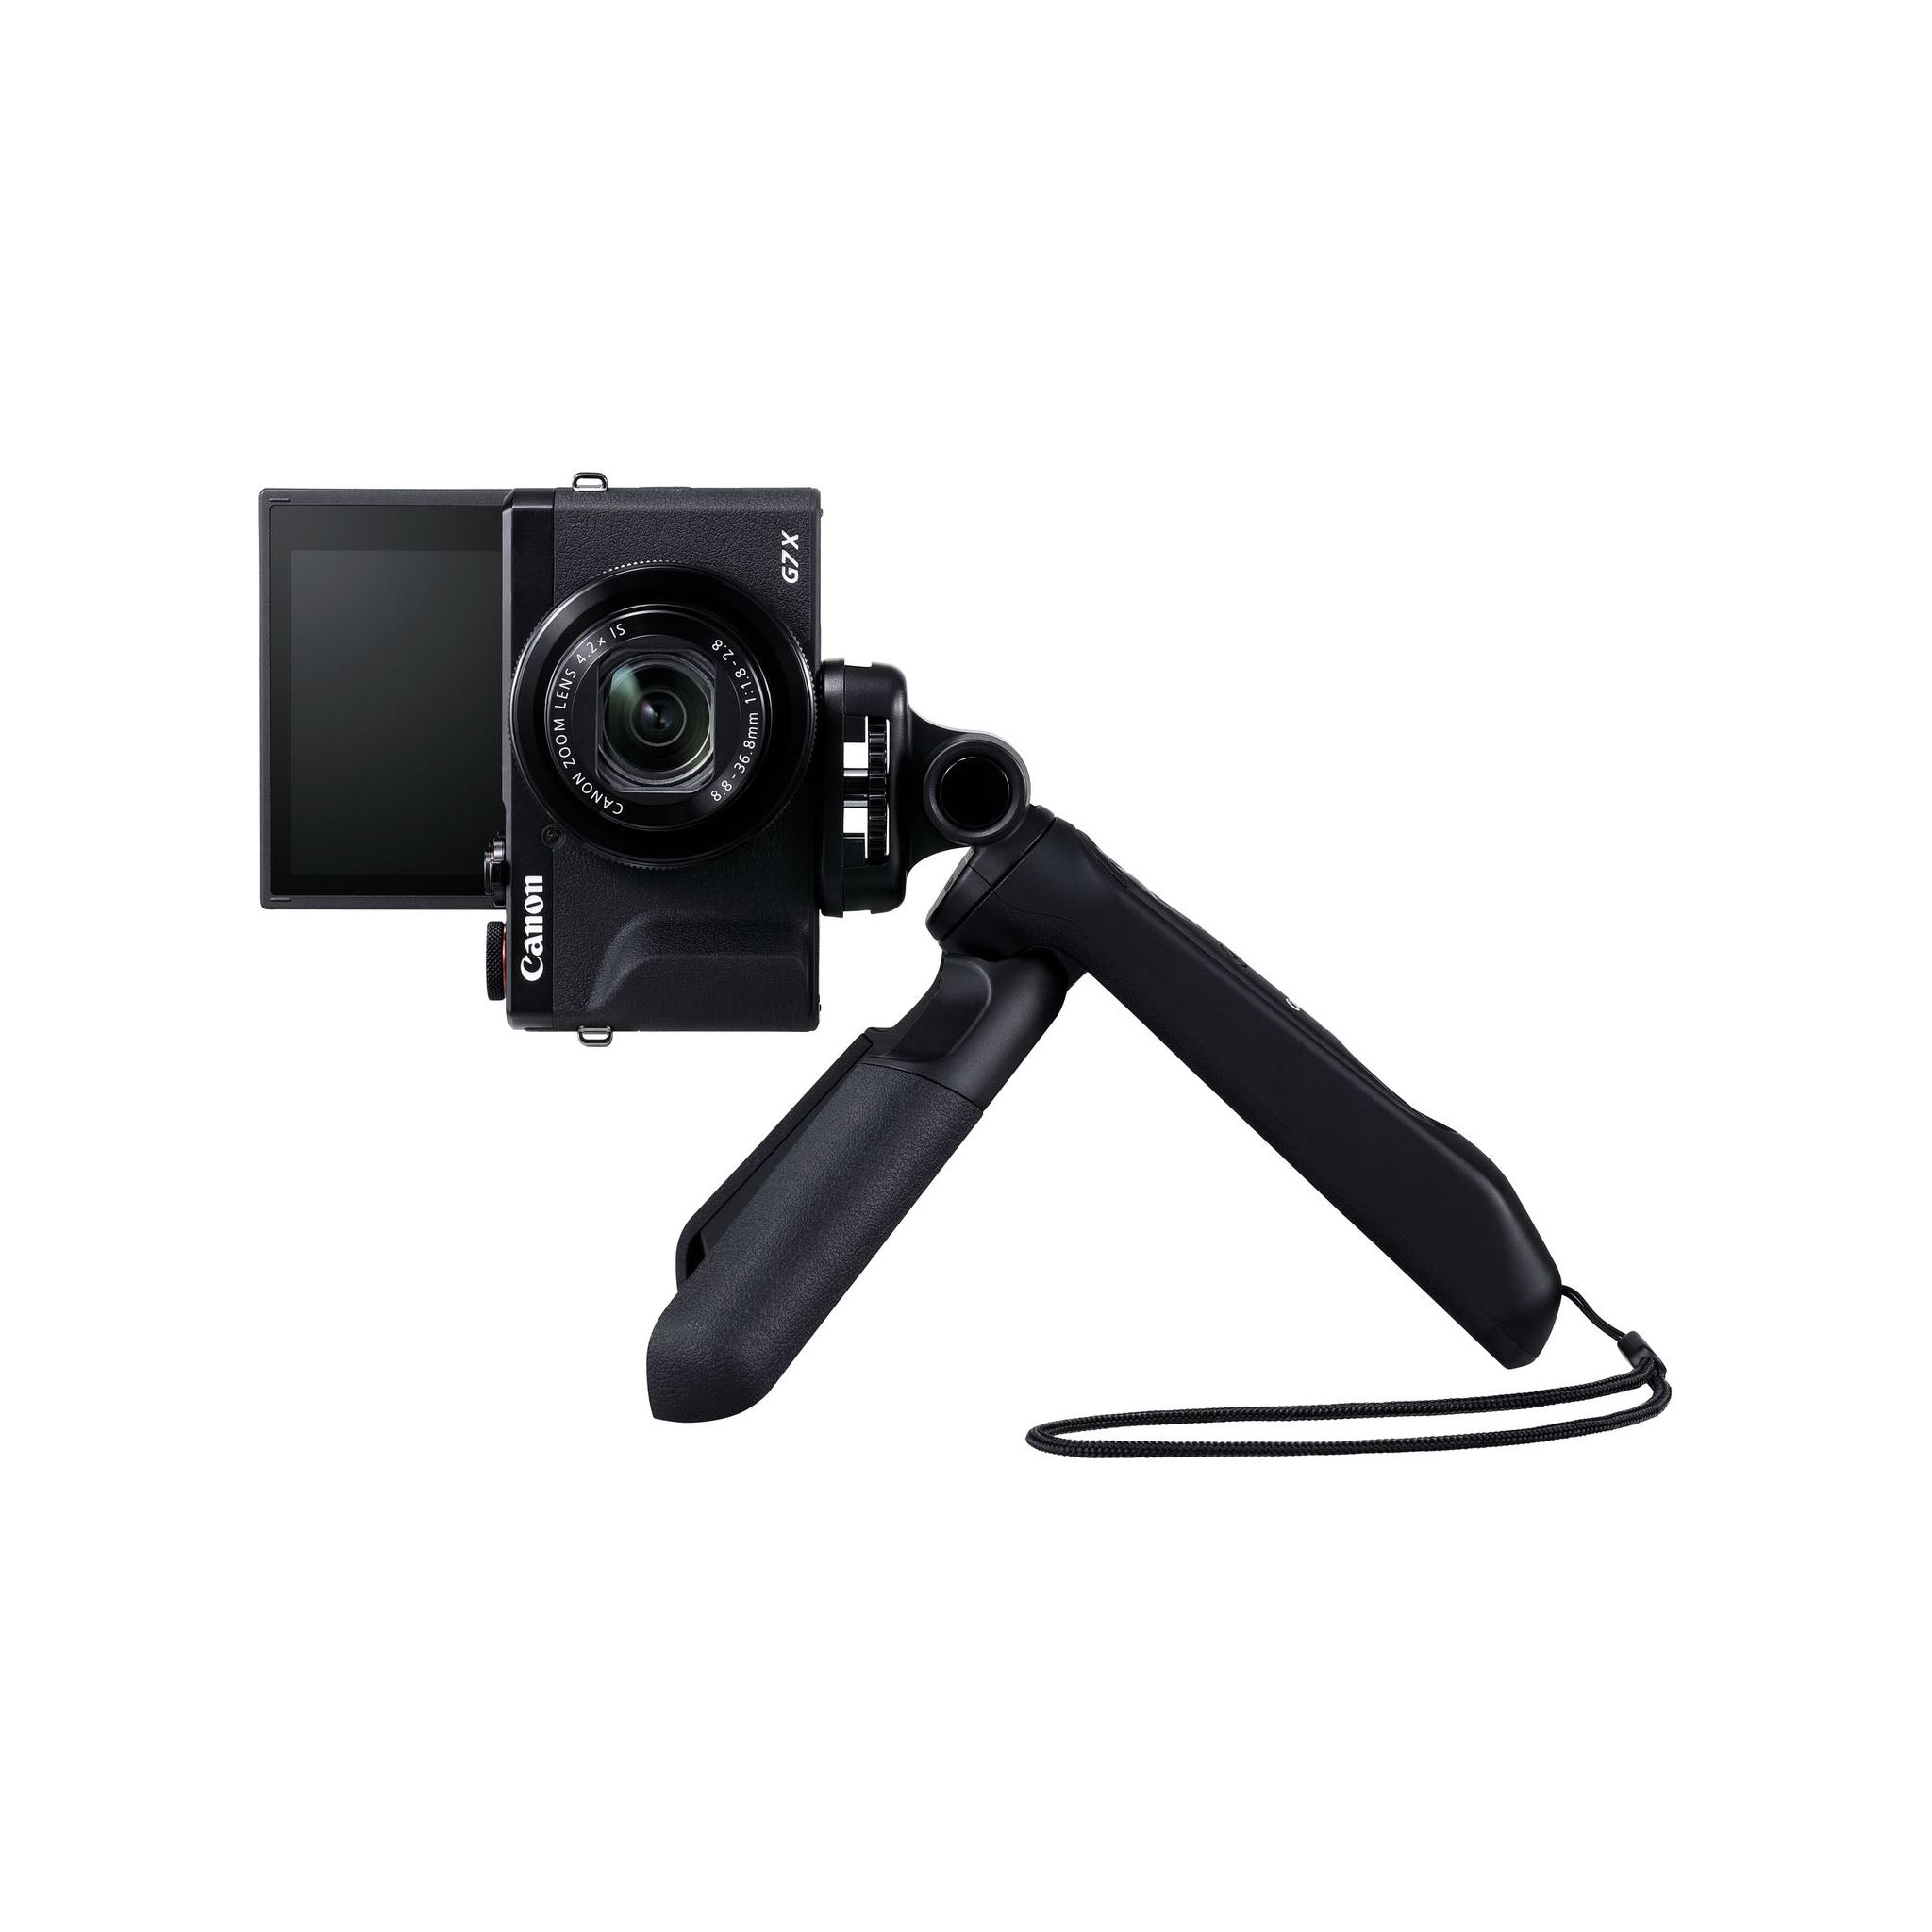 Canon PowerShot G7 X Mark III Camera